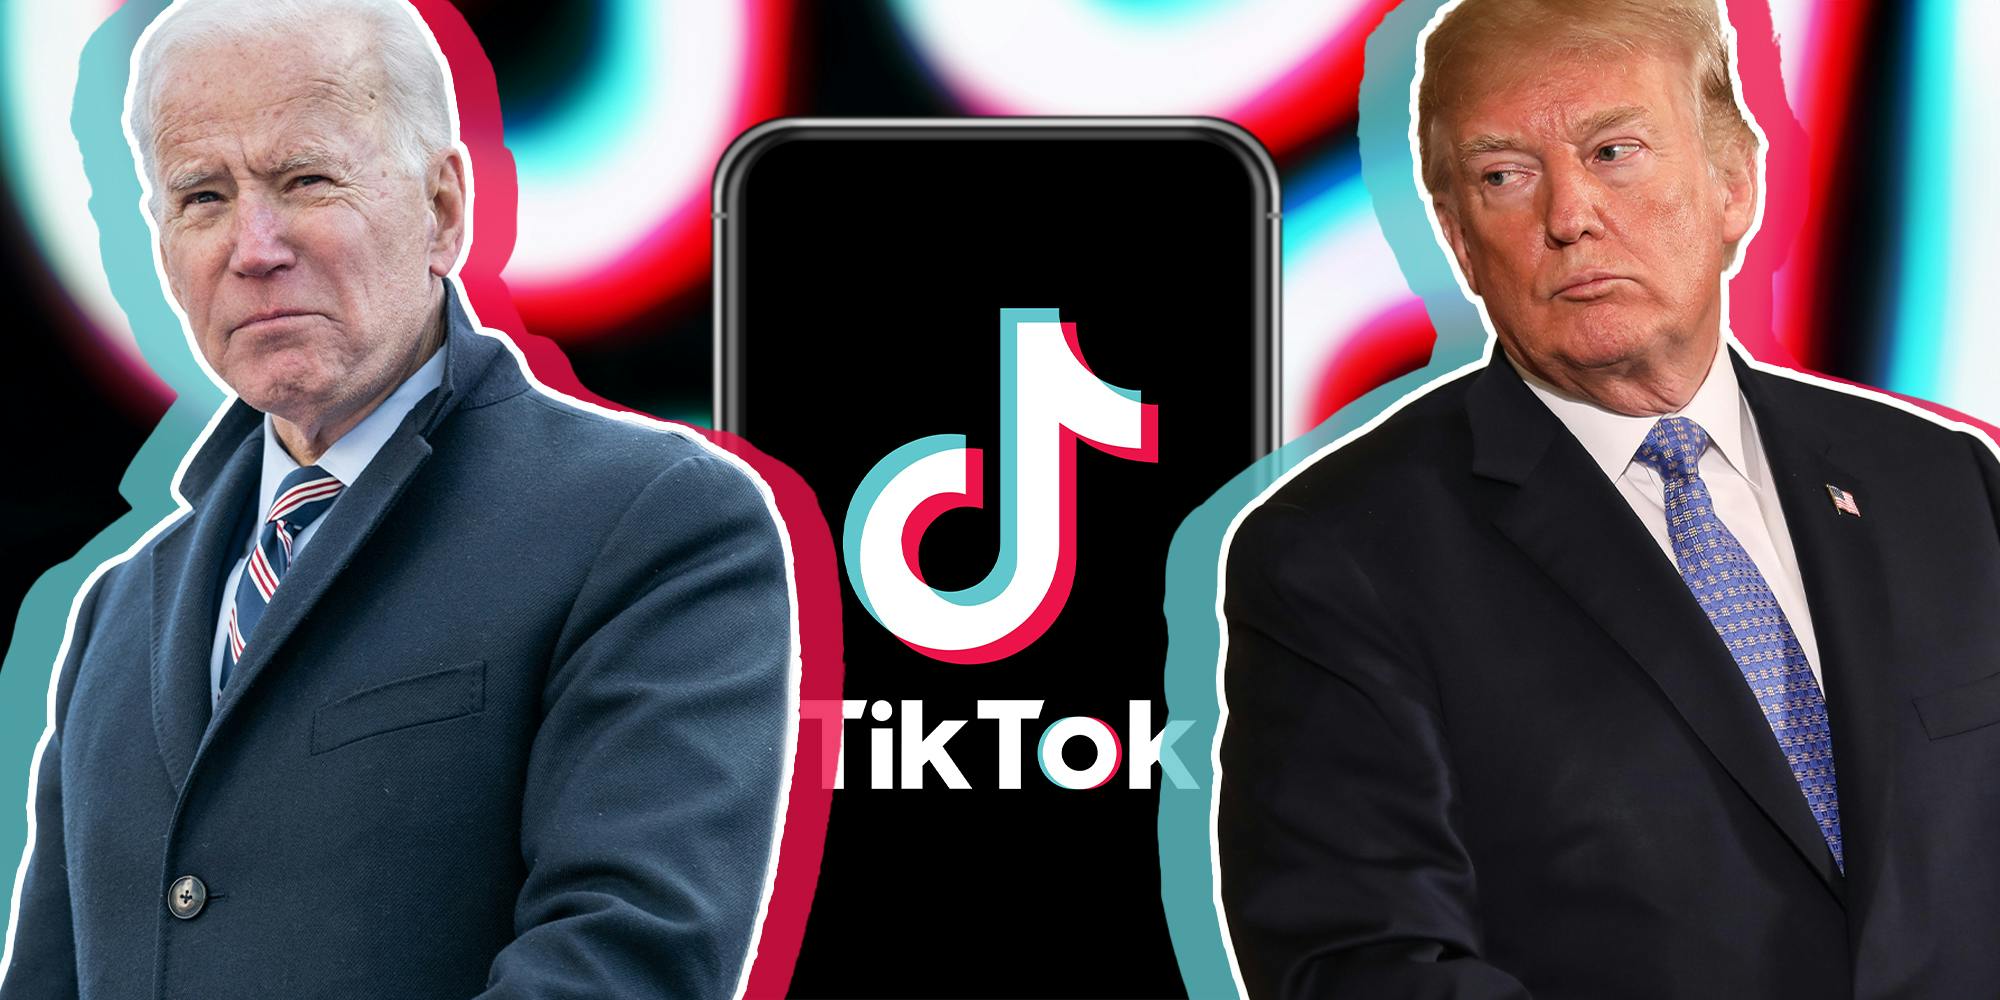 Trump and Biden TikTok Ban